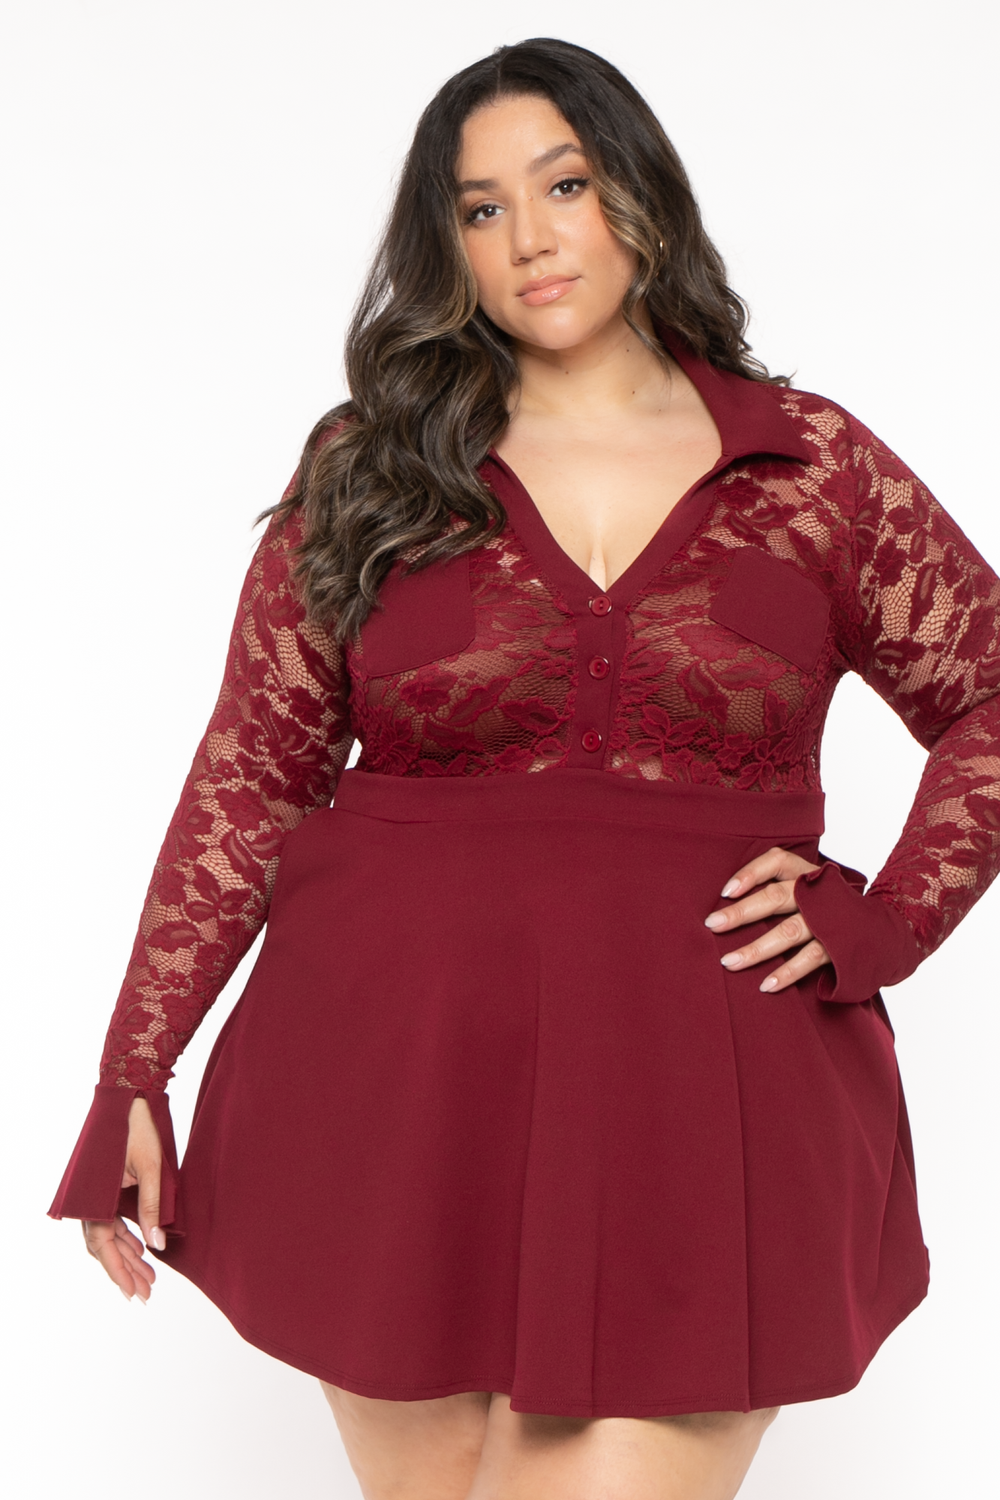 Curvy Sense Dresses Plus Size  Gamela Lace Flare Dress - Burgundy